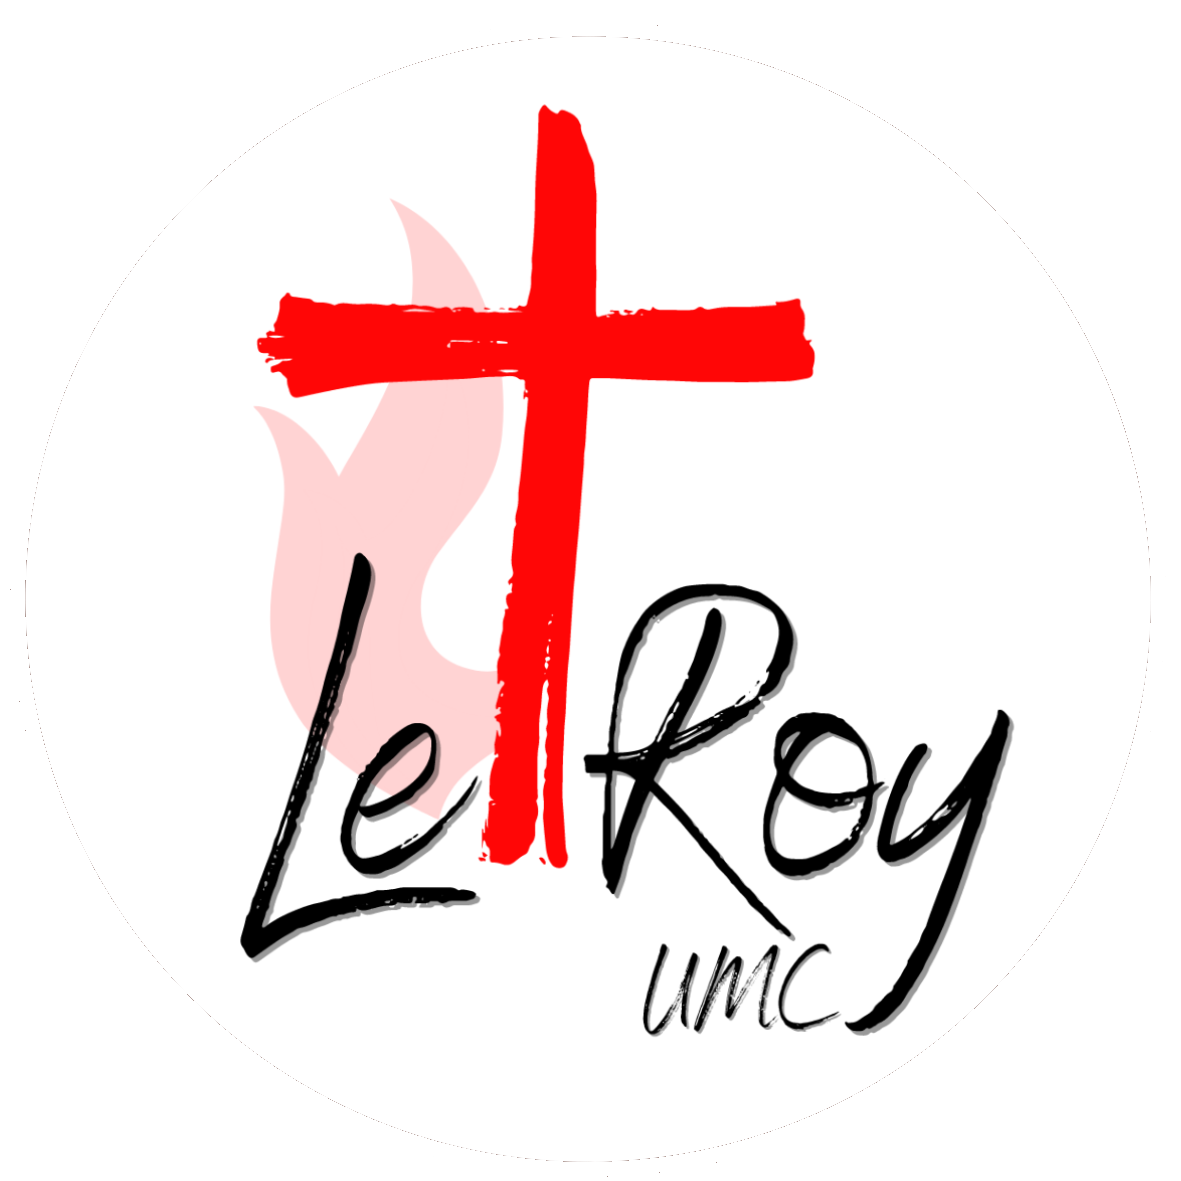 LeRoy UMC